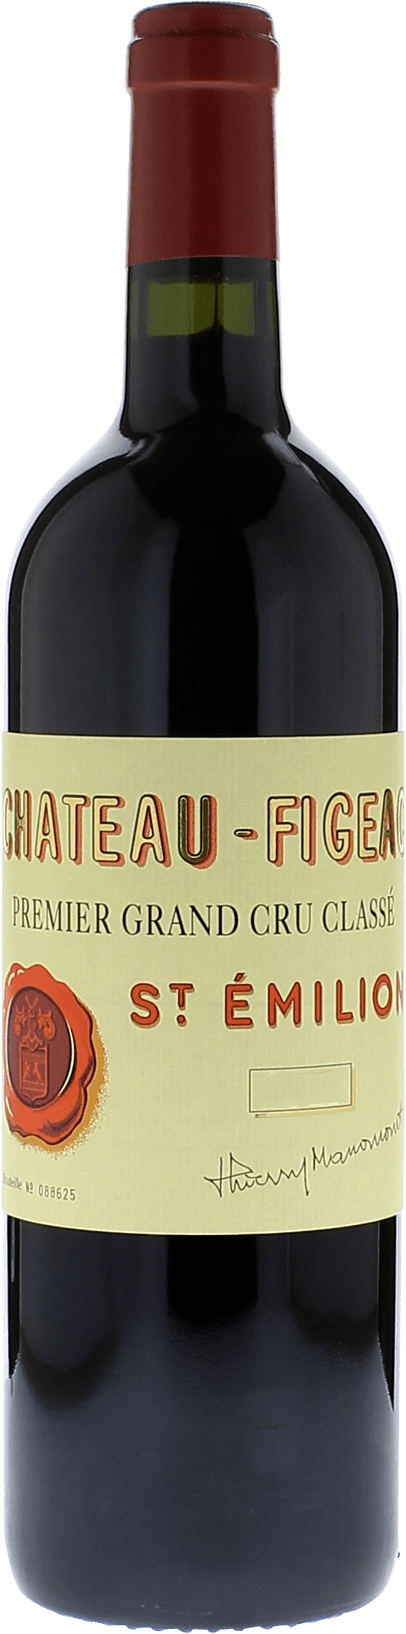 Figeac 2015 1er Grand cru B class Saint-Emilion, Bordeaux rouge